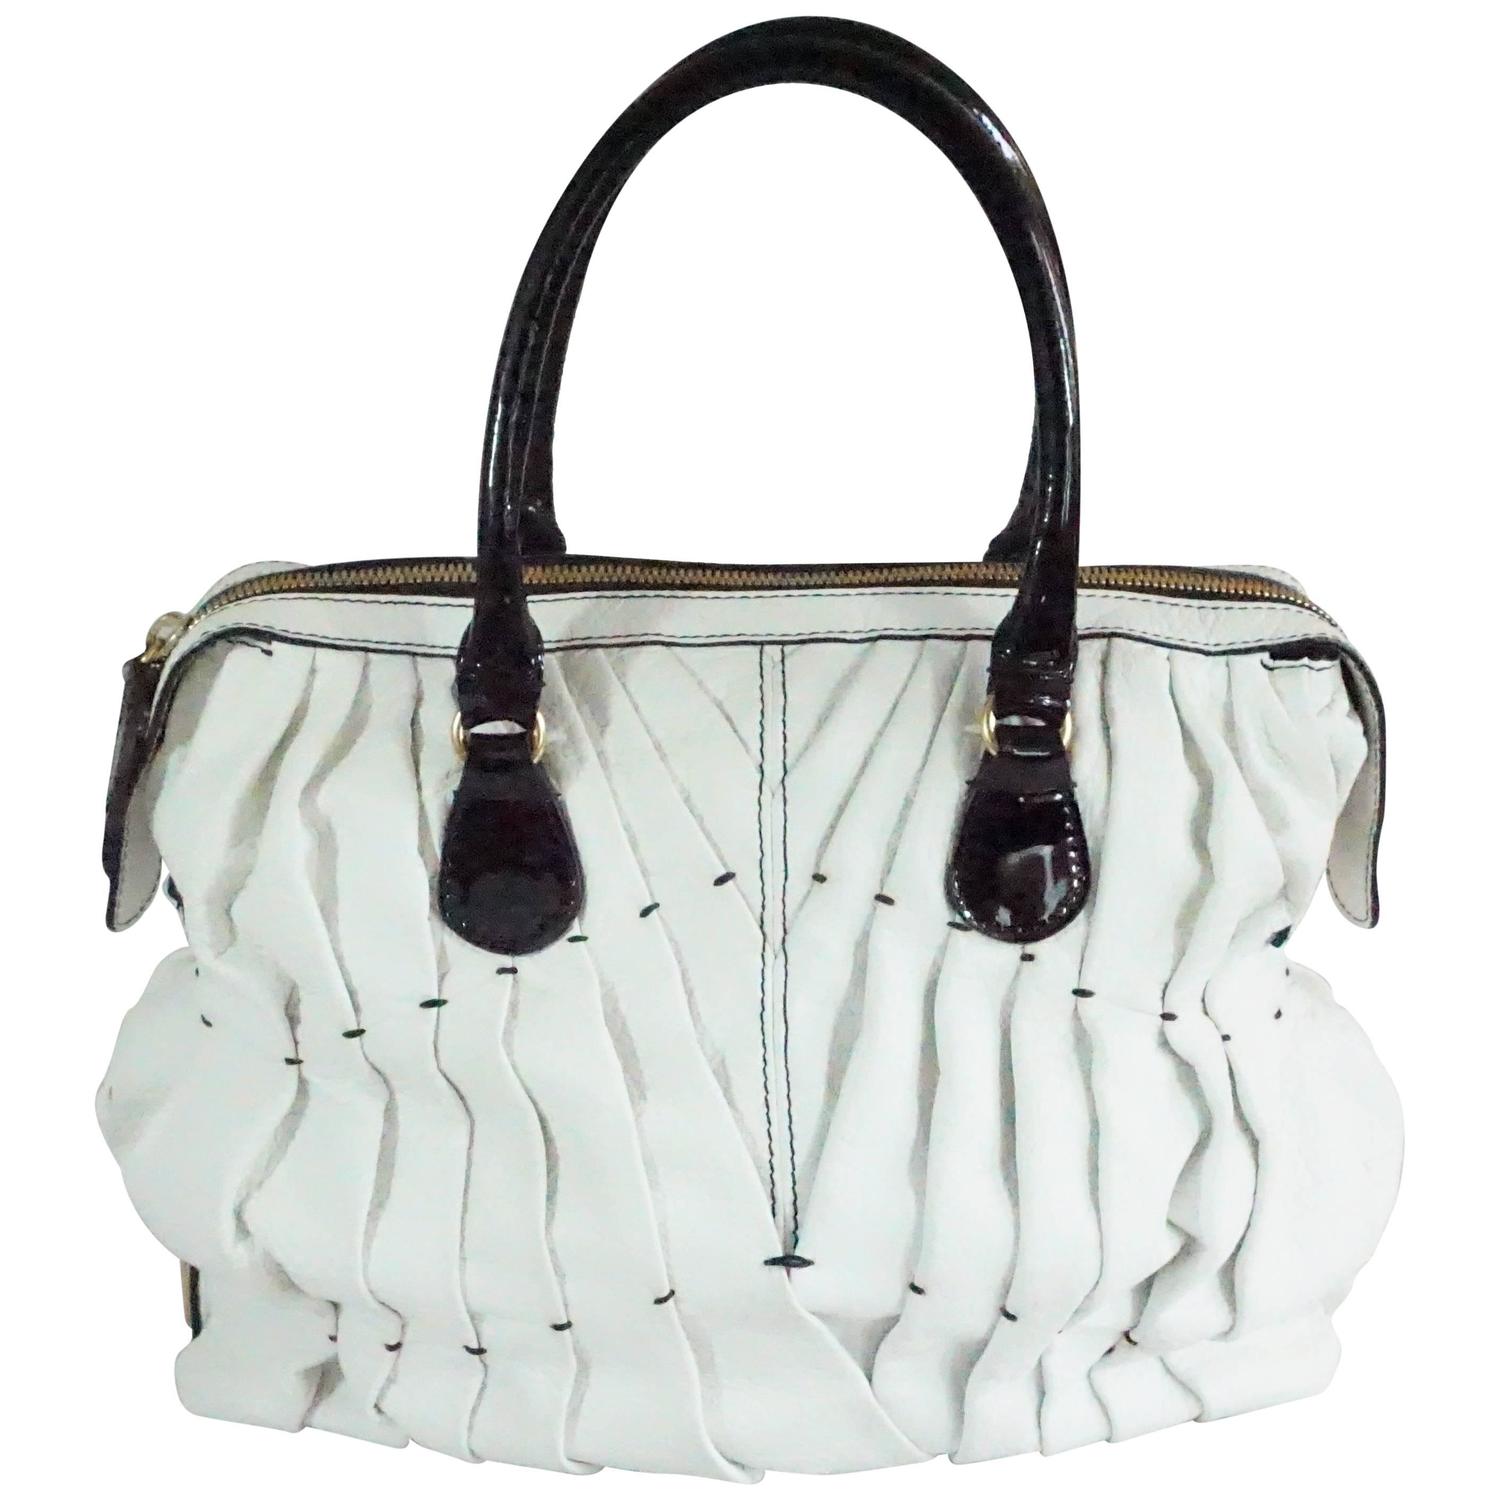 Valentino Garavani White Pebbled Leather Handbag w/ Black Patent Handles-GHW For Sale at 1stdibs